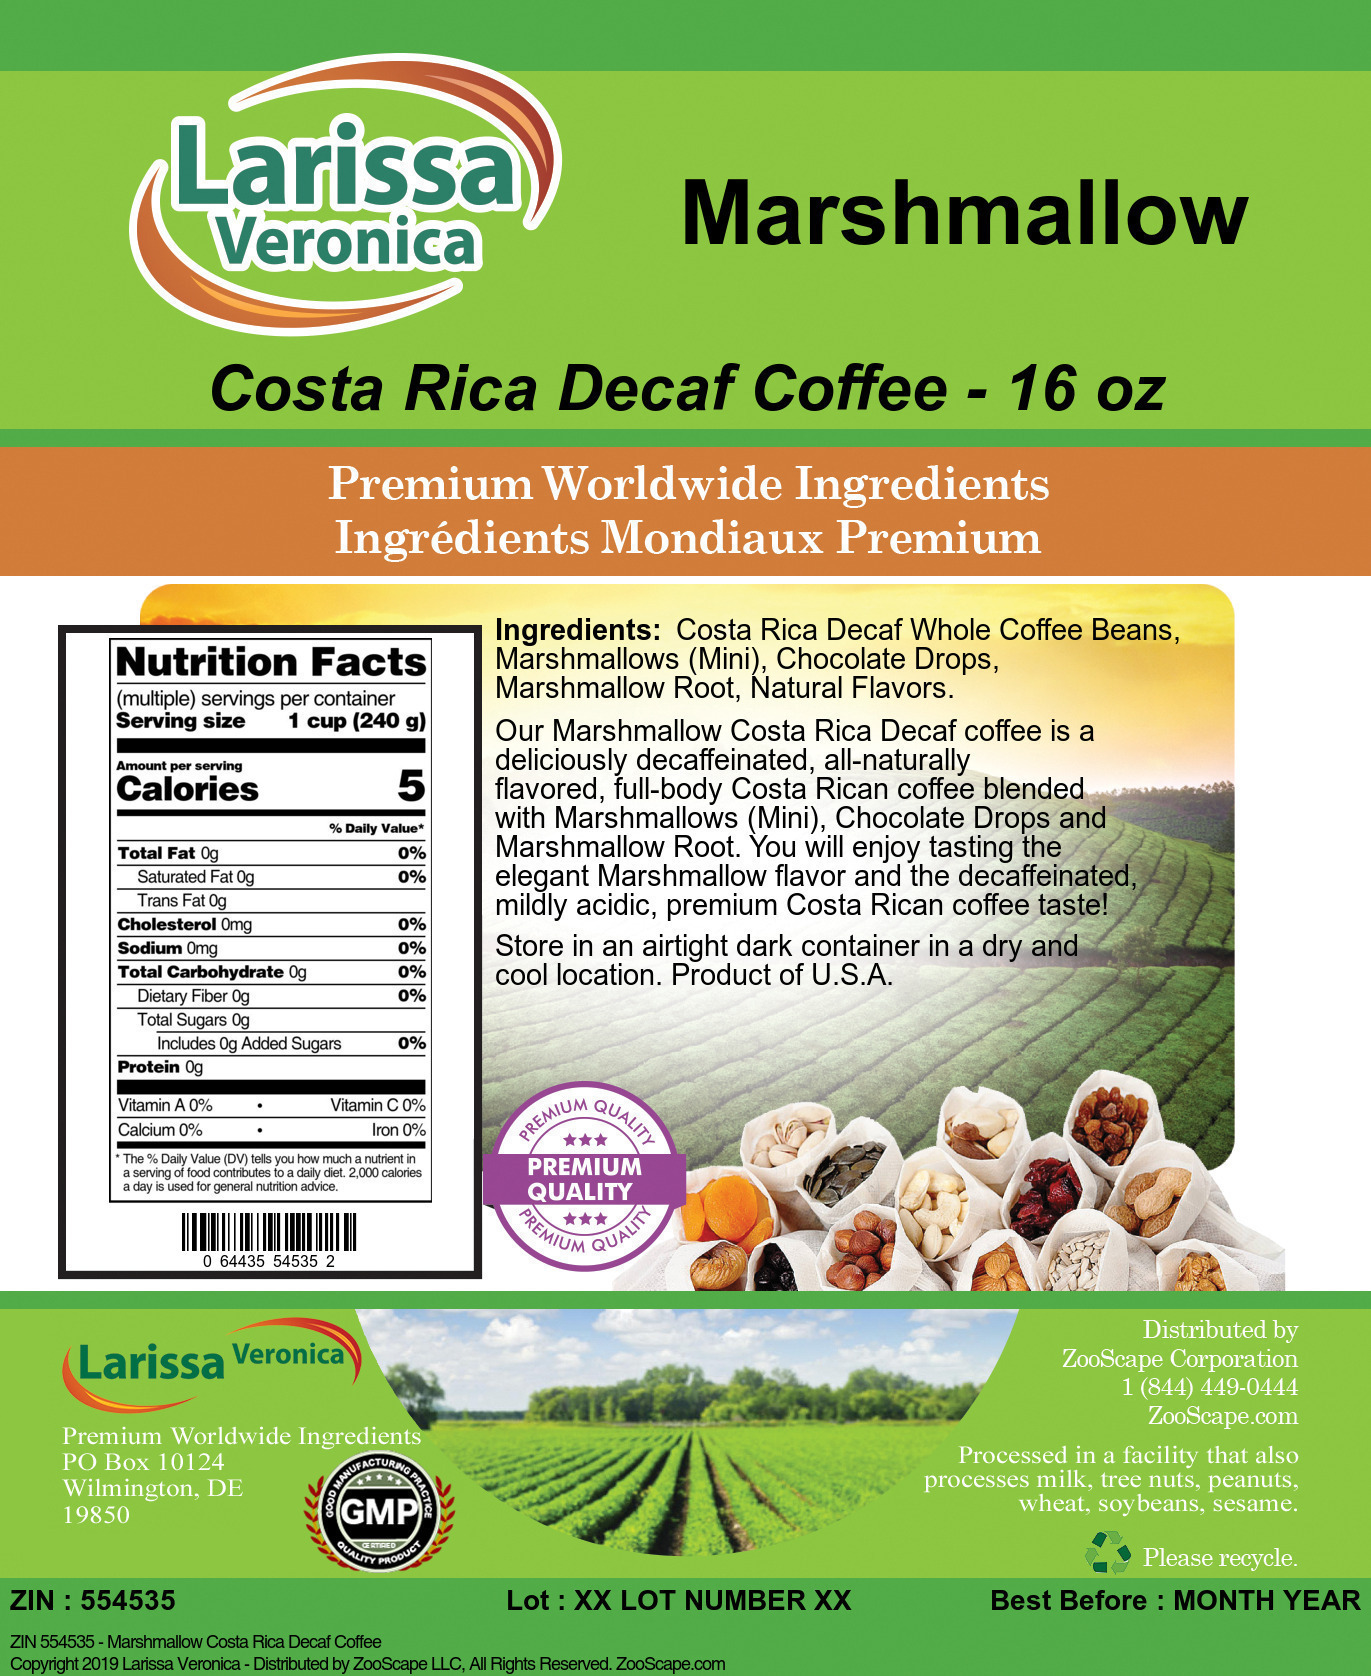 Marshmallow Costa Rica Decaf Coffee - Label